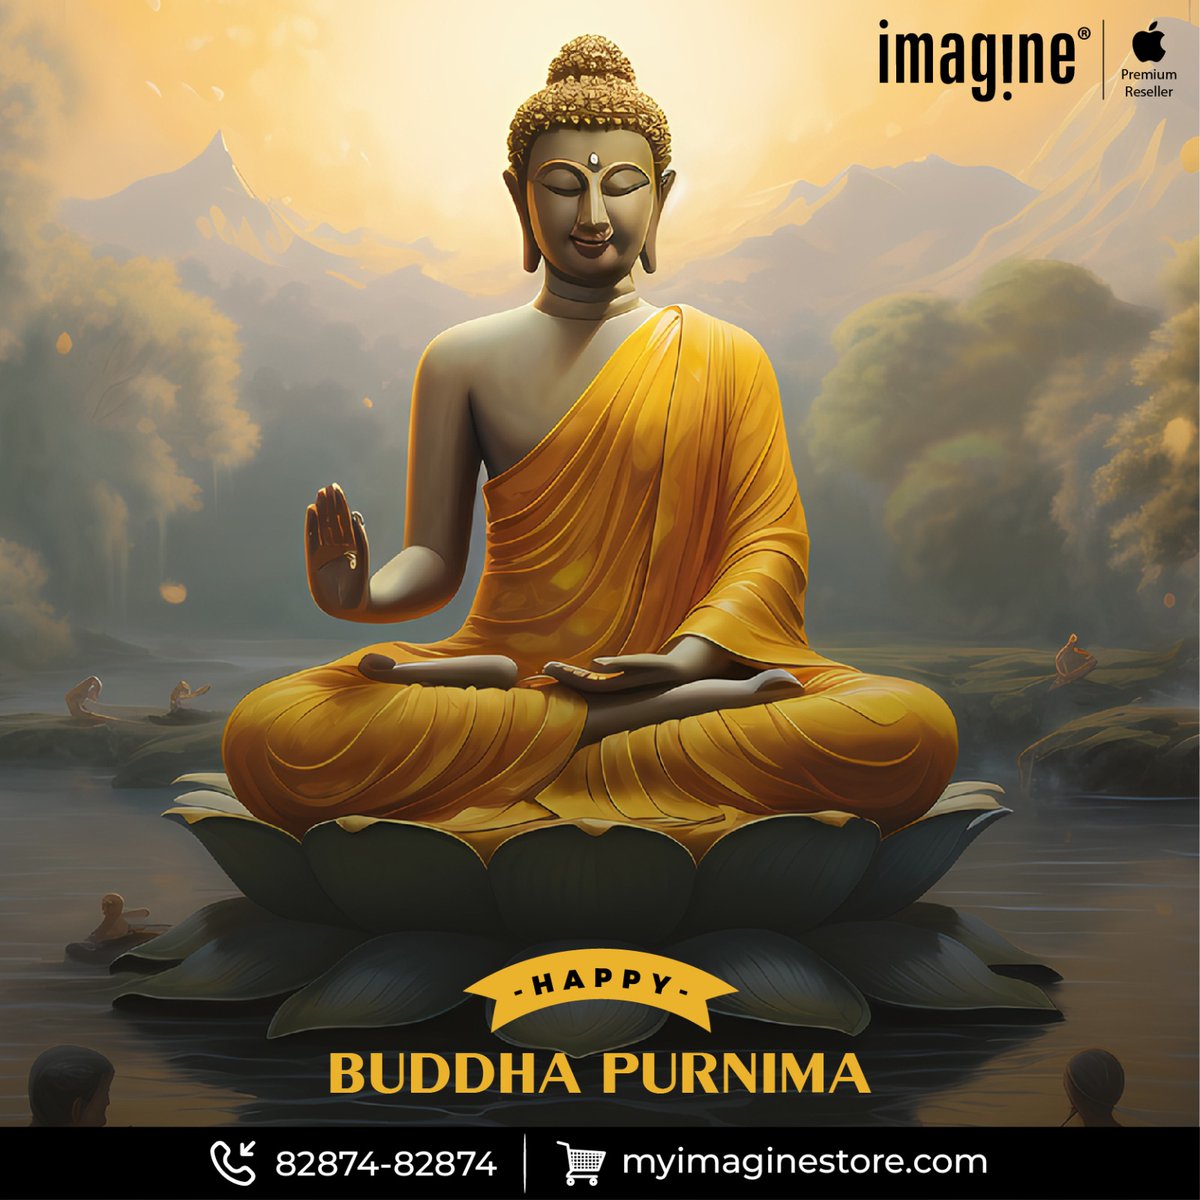 May the full moon of Buddha Purnima bring peace, happiness, and good health to your life. Happy Buddha Purnima from @ImagineApplePR! #Tresor #Imagine #Apple #BuddhaPurnima #Wishes #Blessings